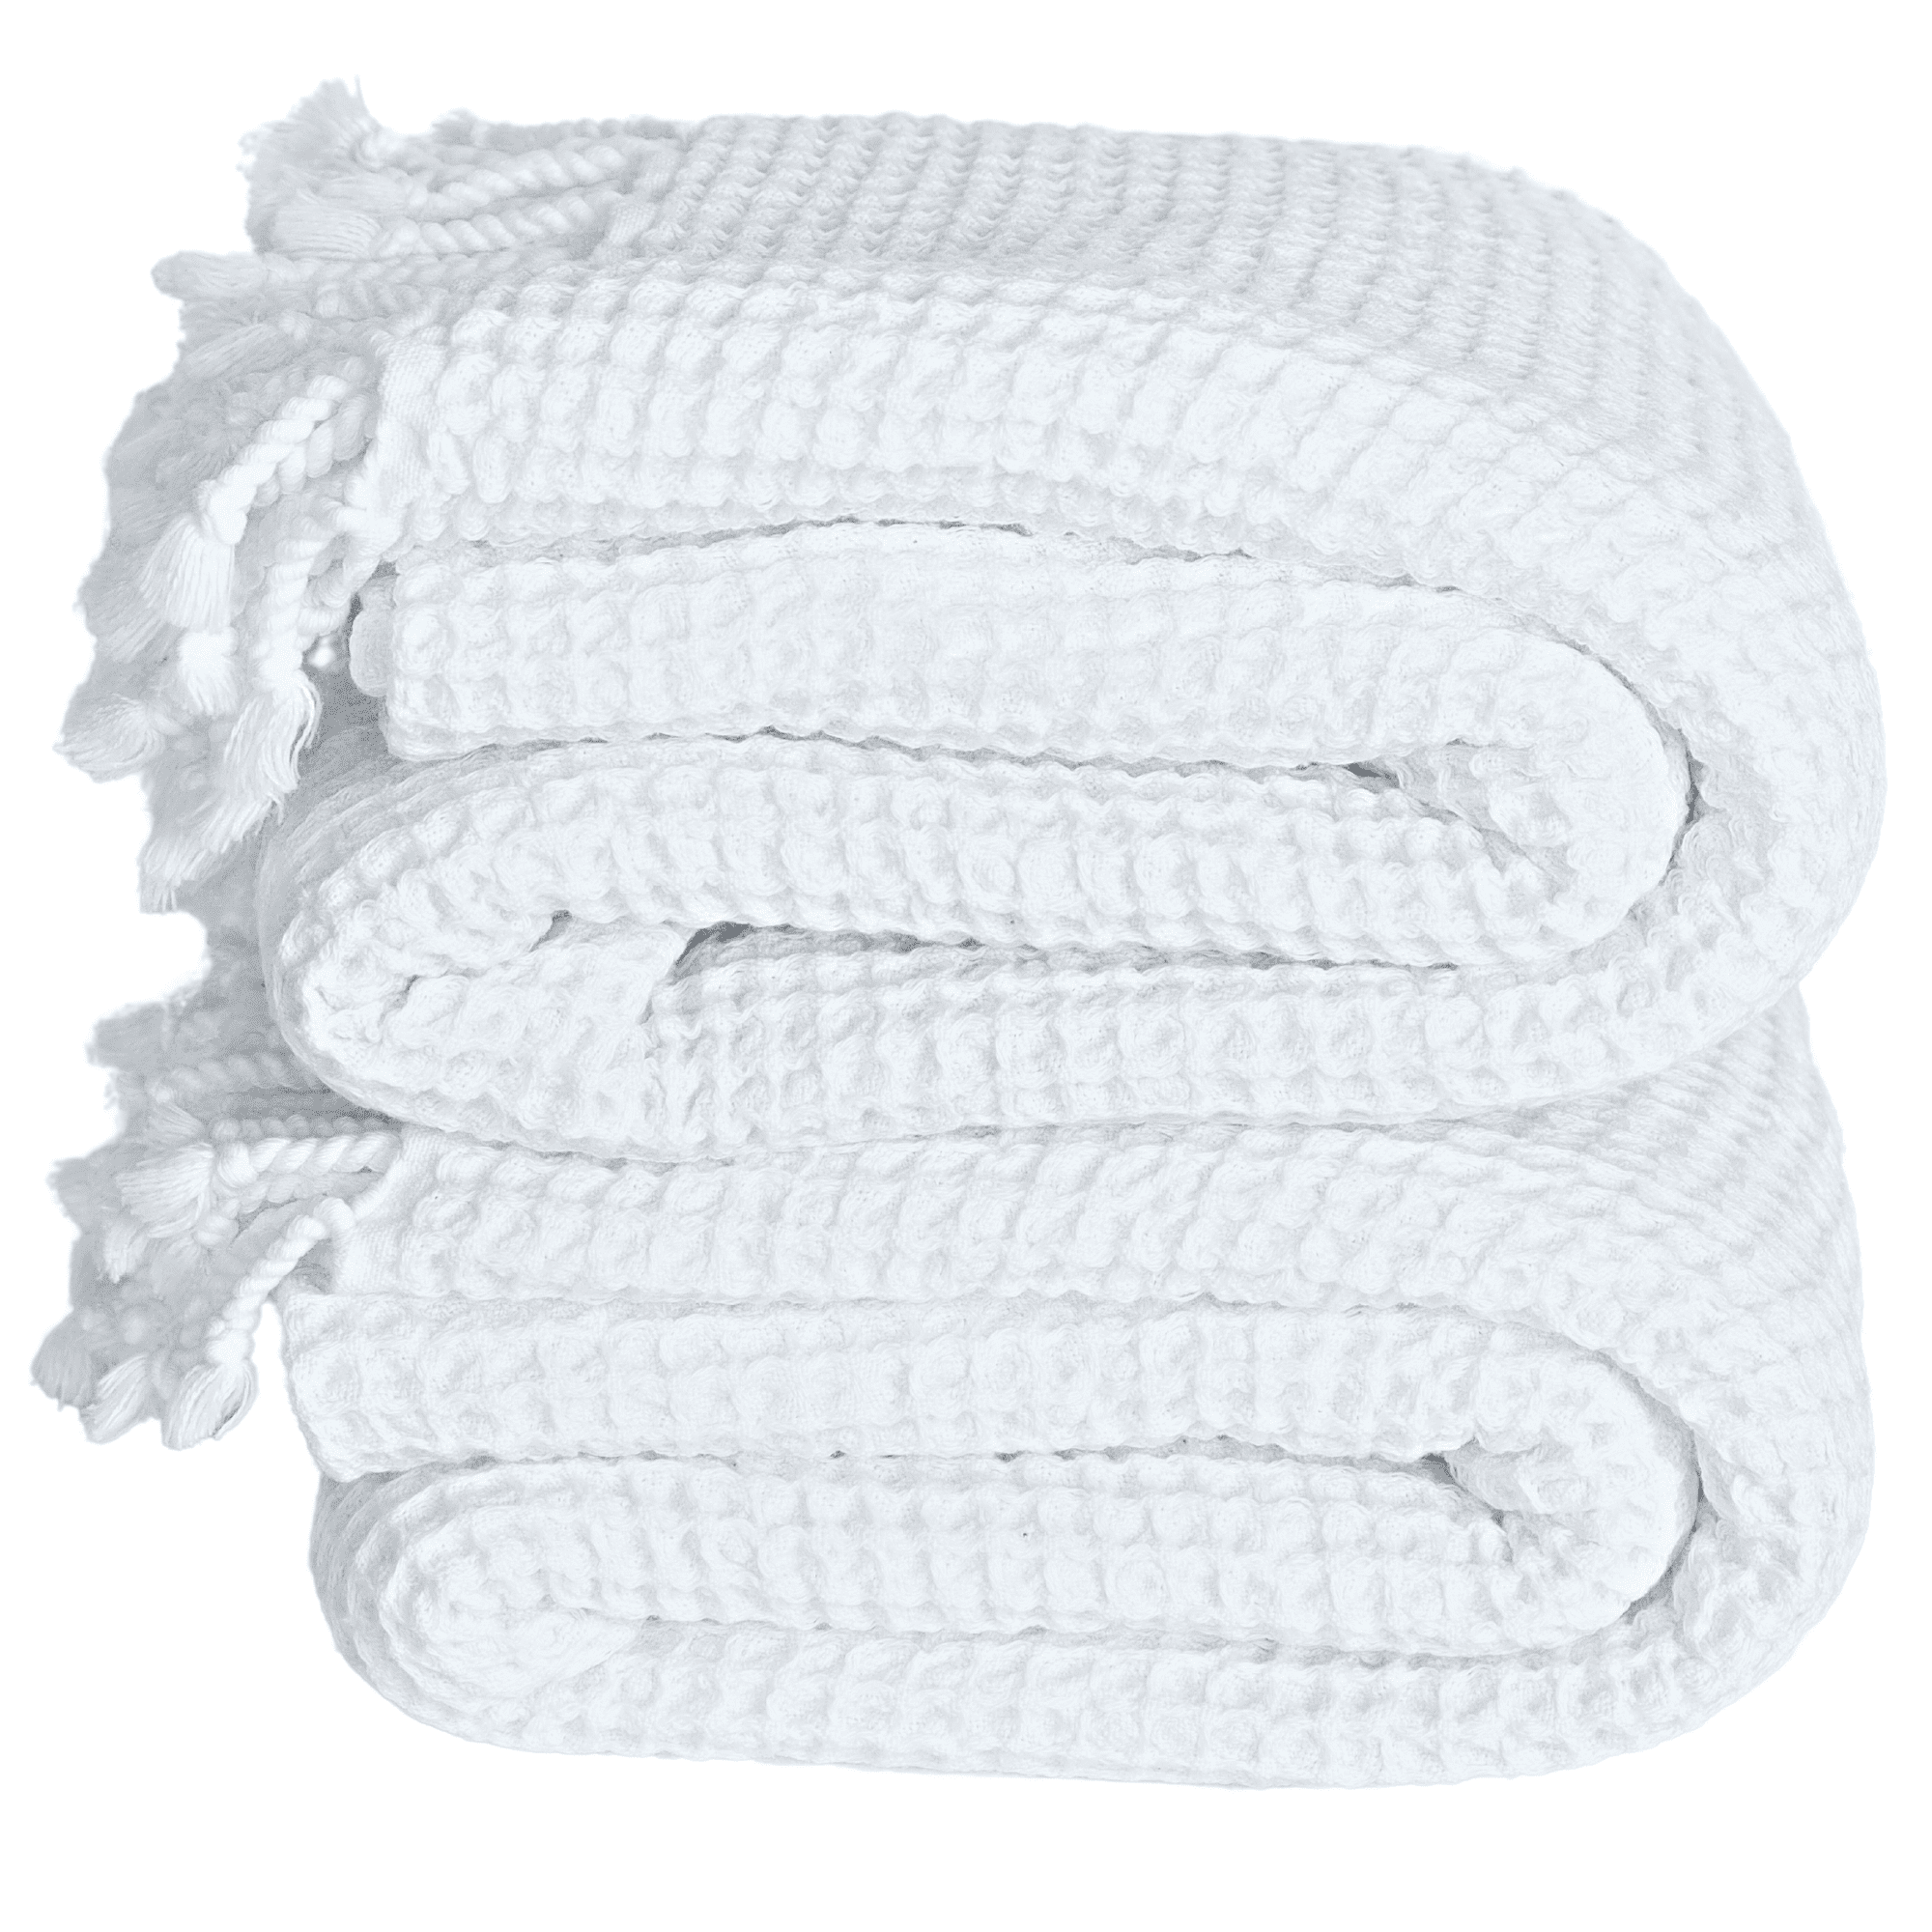 Waffle Beach Towel, Turkish Cotton Waffle Weave Towel, Turkish Waffle Towel, Waffle Textured Towel, Handmade, with Tassel, Soft, Thin, Quick Dry Beach Towel (White)